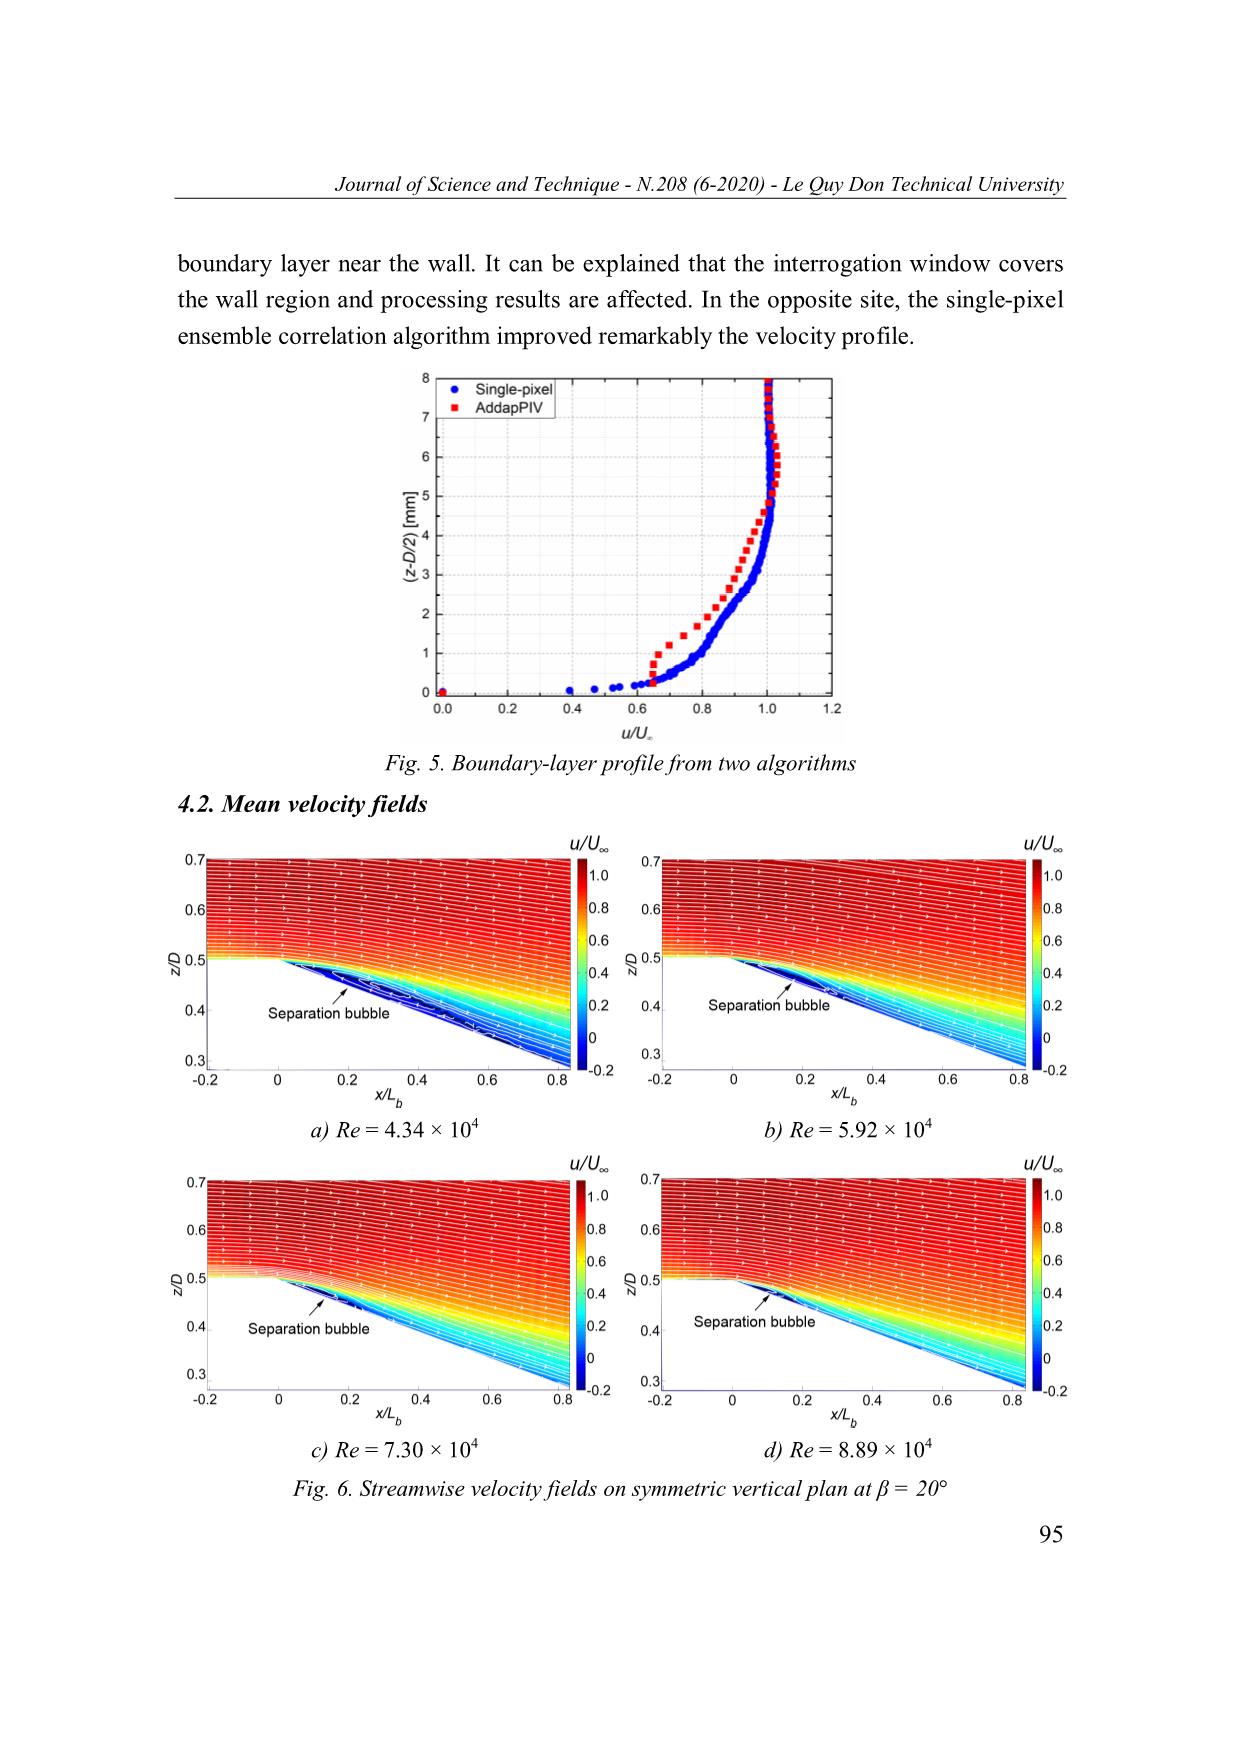 Single-pixel ensemble correlation algorithm for boundary measurement on axisymmetric boattail surface trang 7